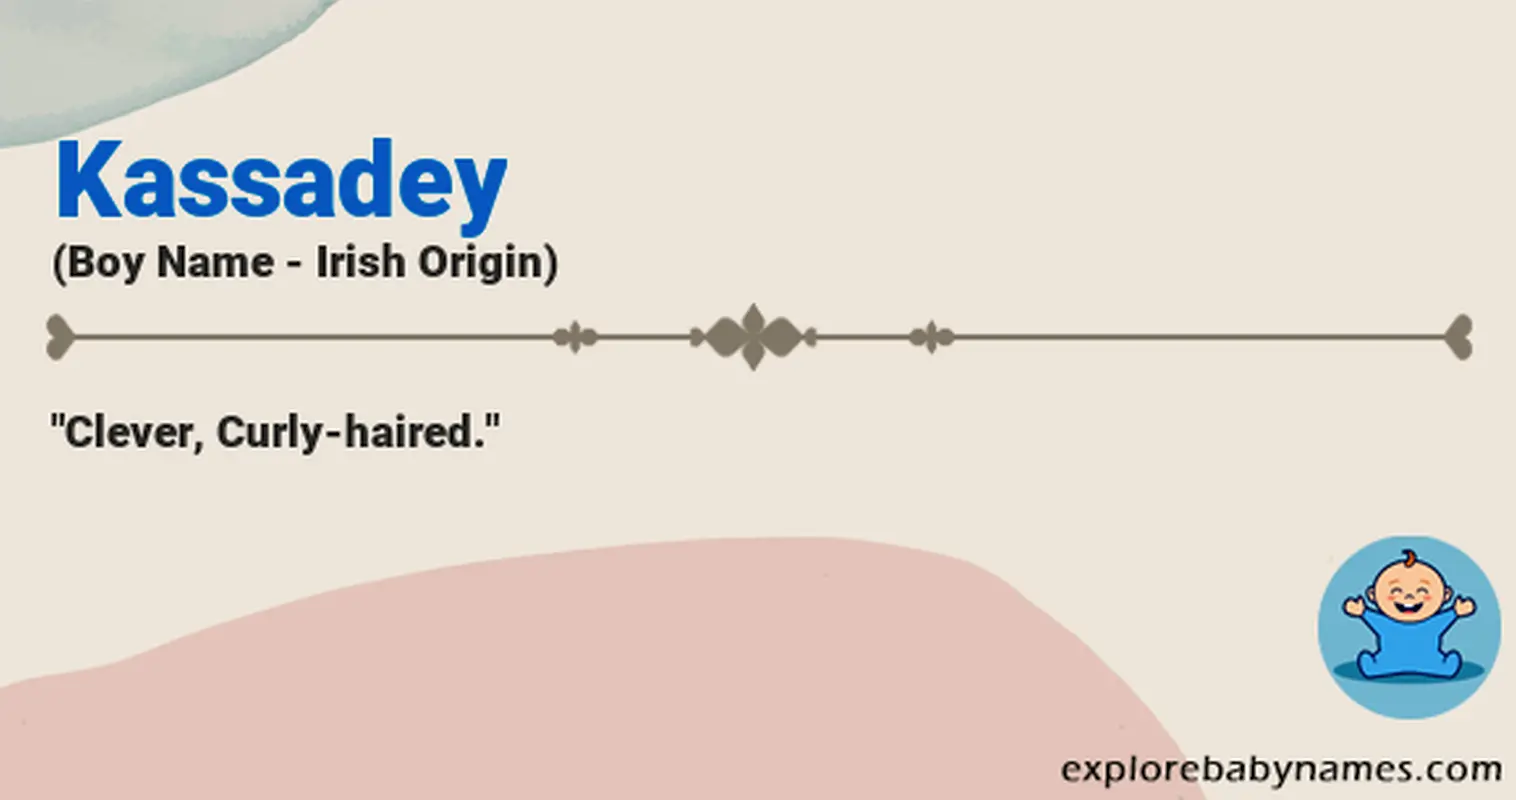 Meaning of Kassadey